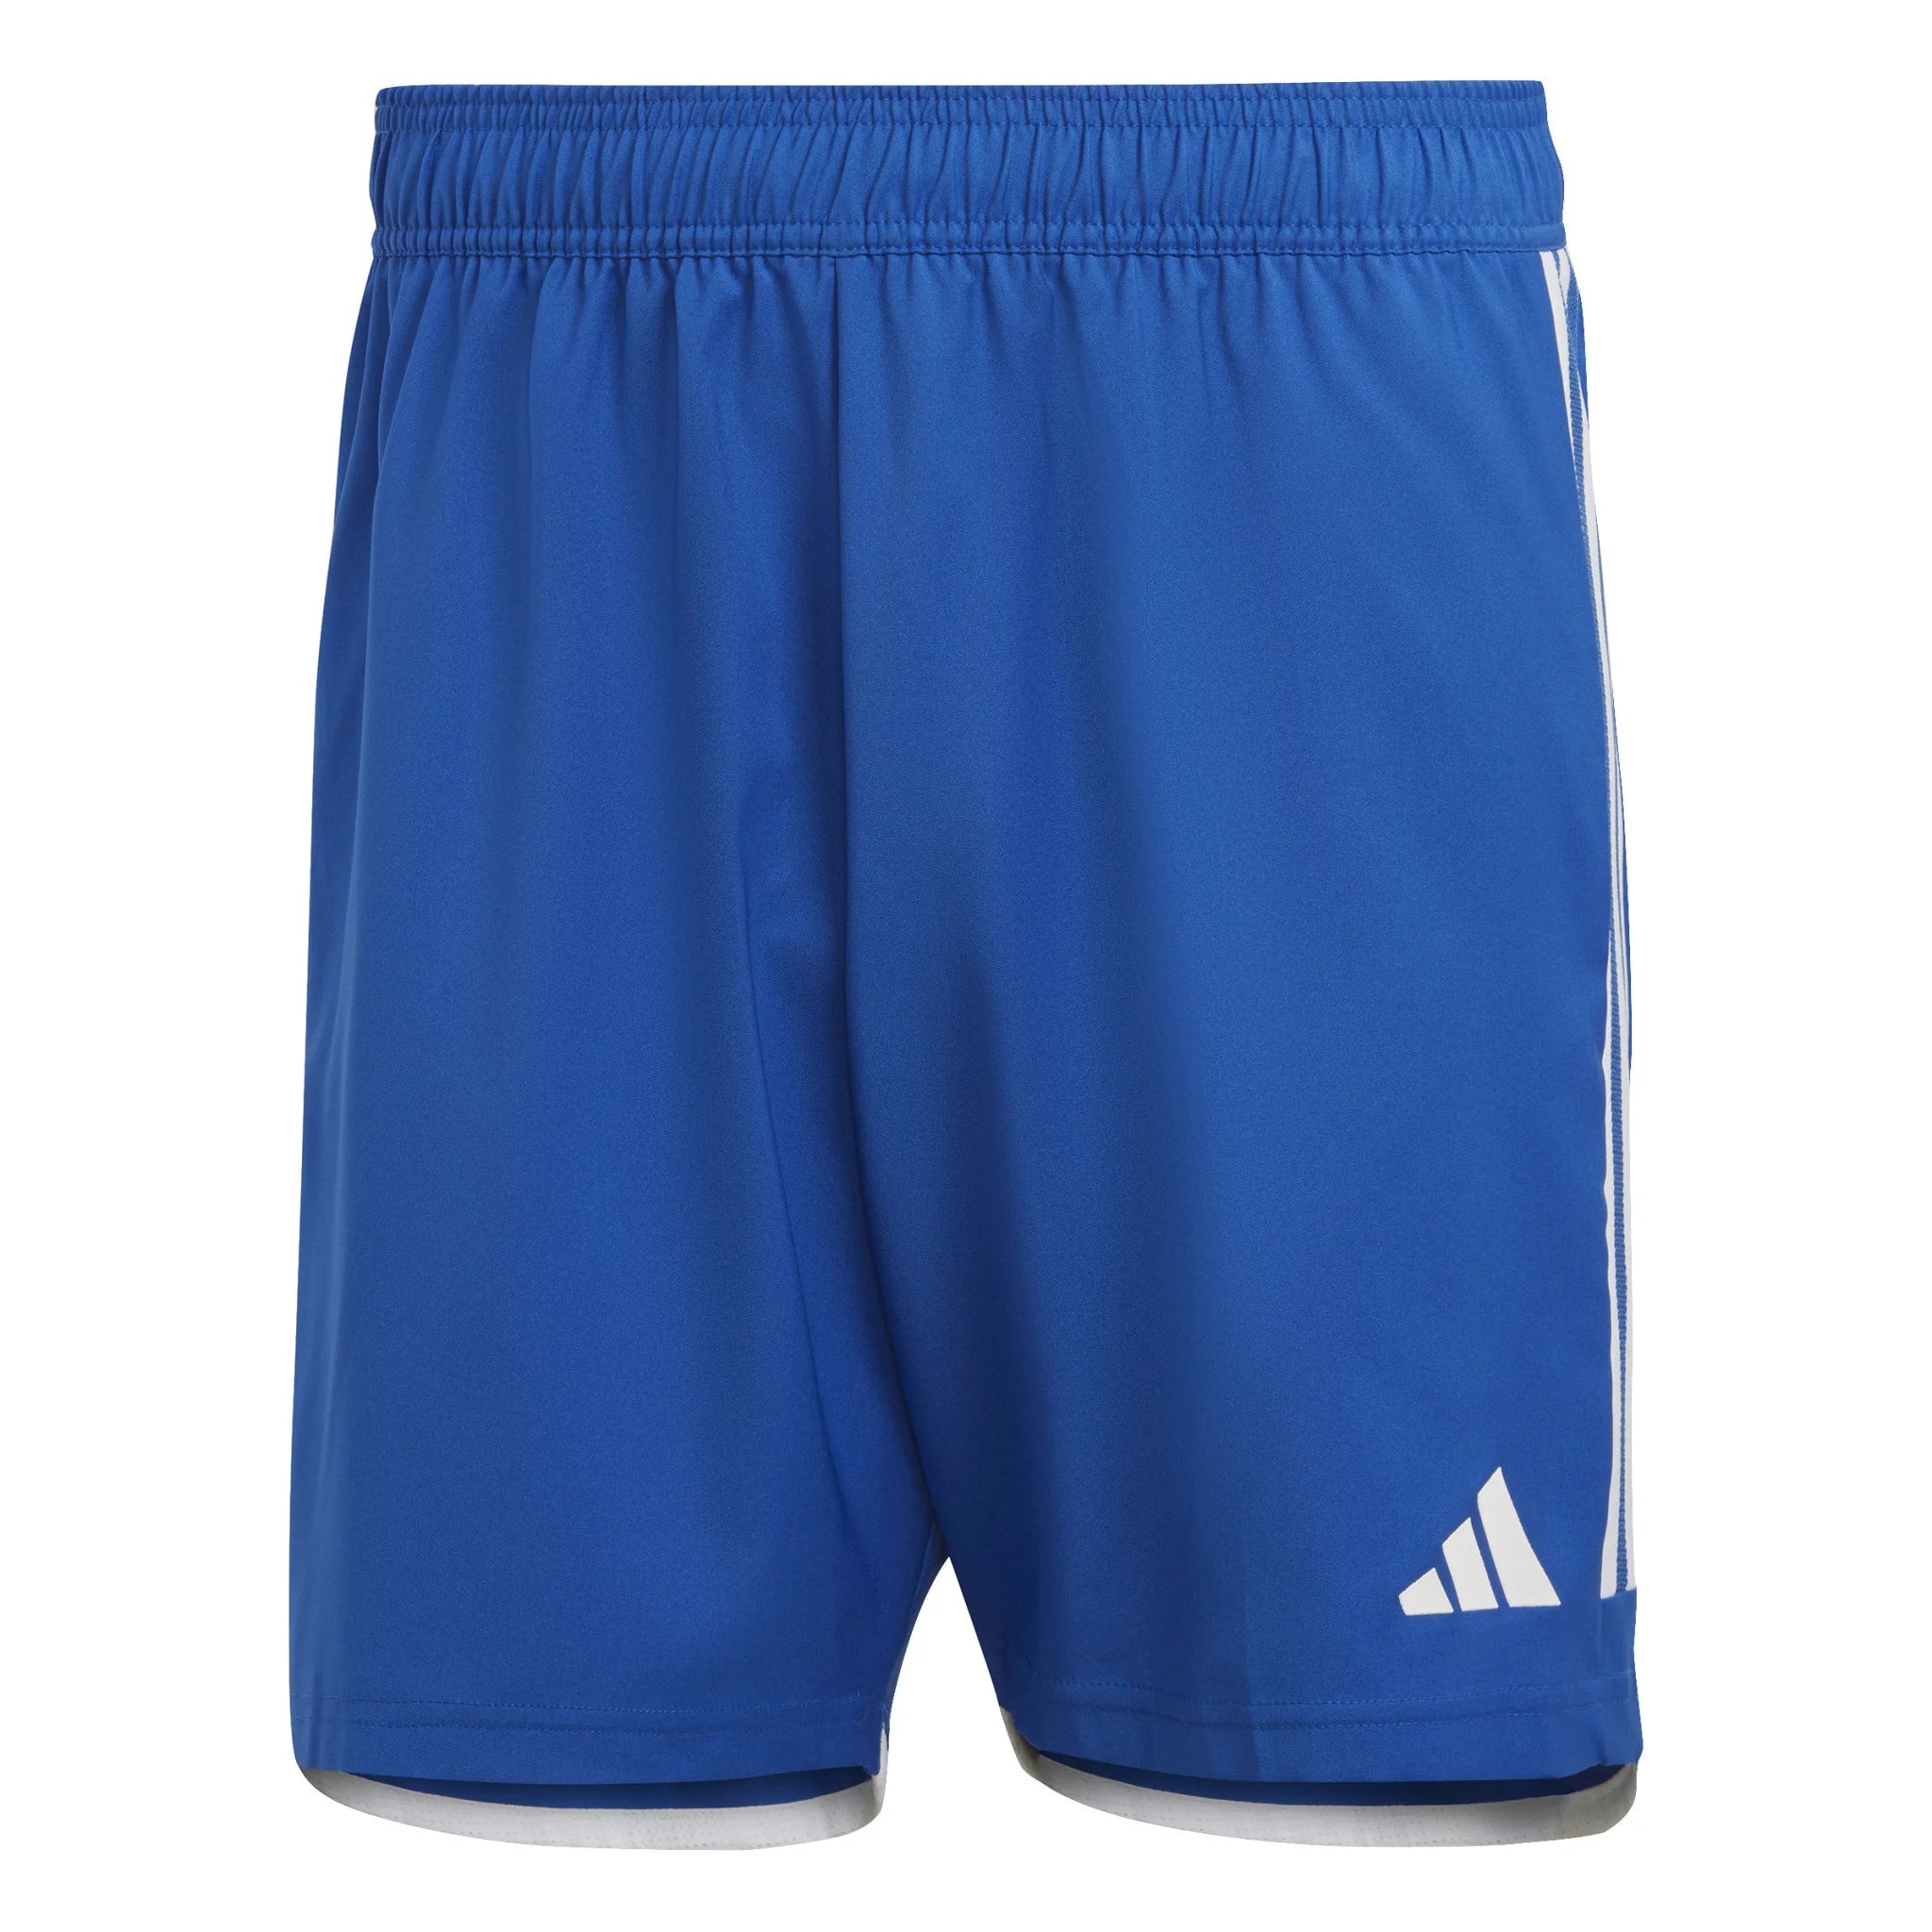 Adidas Tiro 23 Short - Team Royal Blue/White Youth